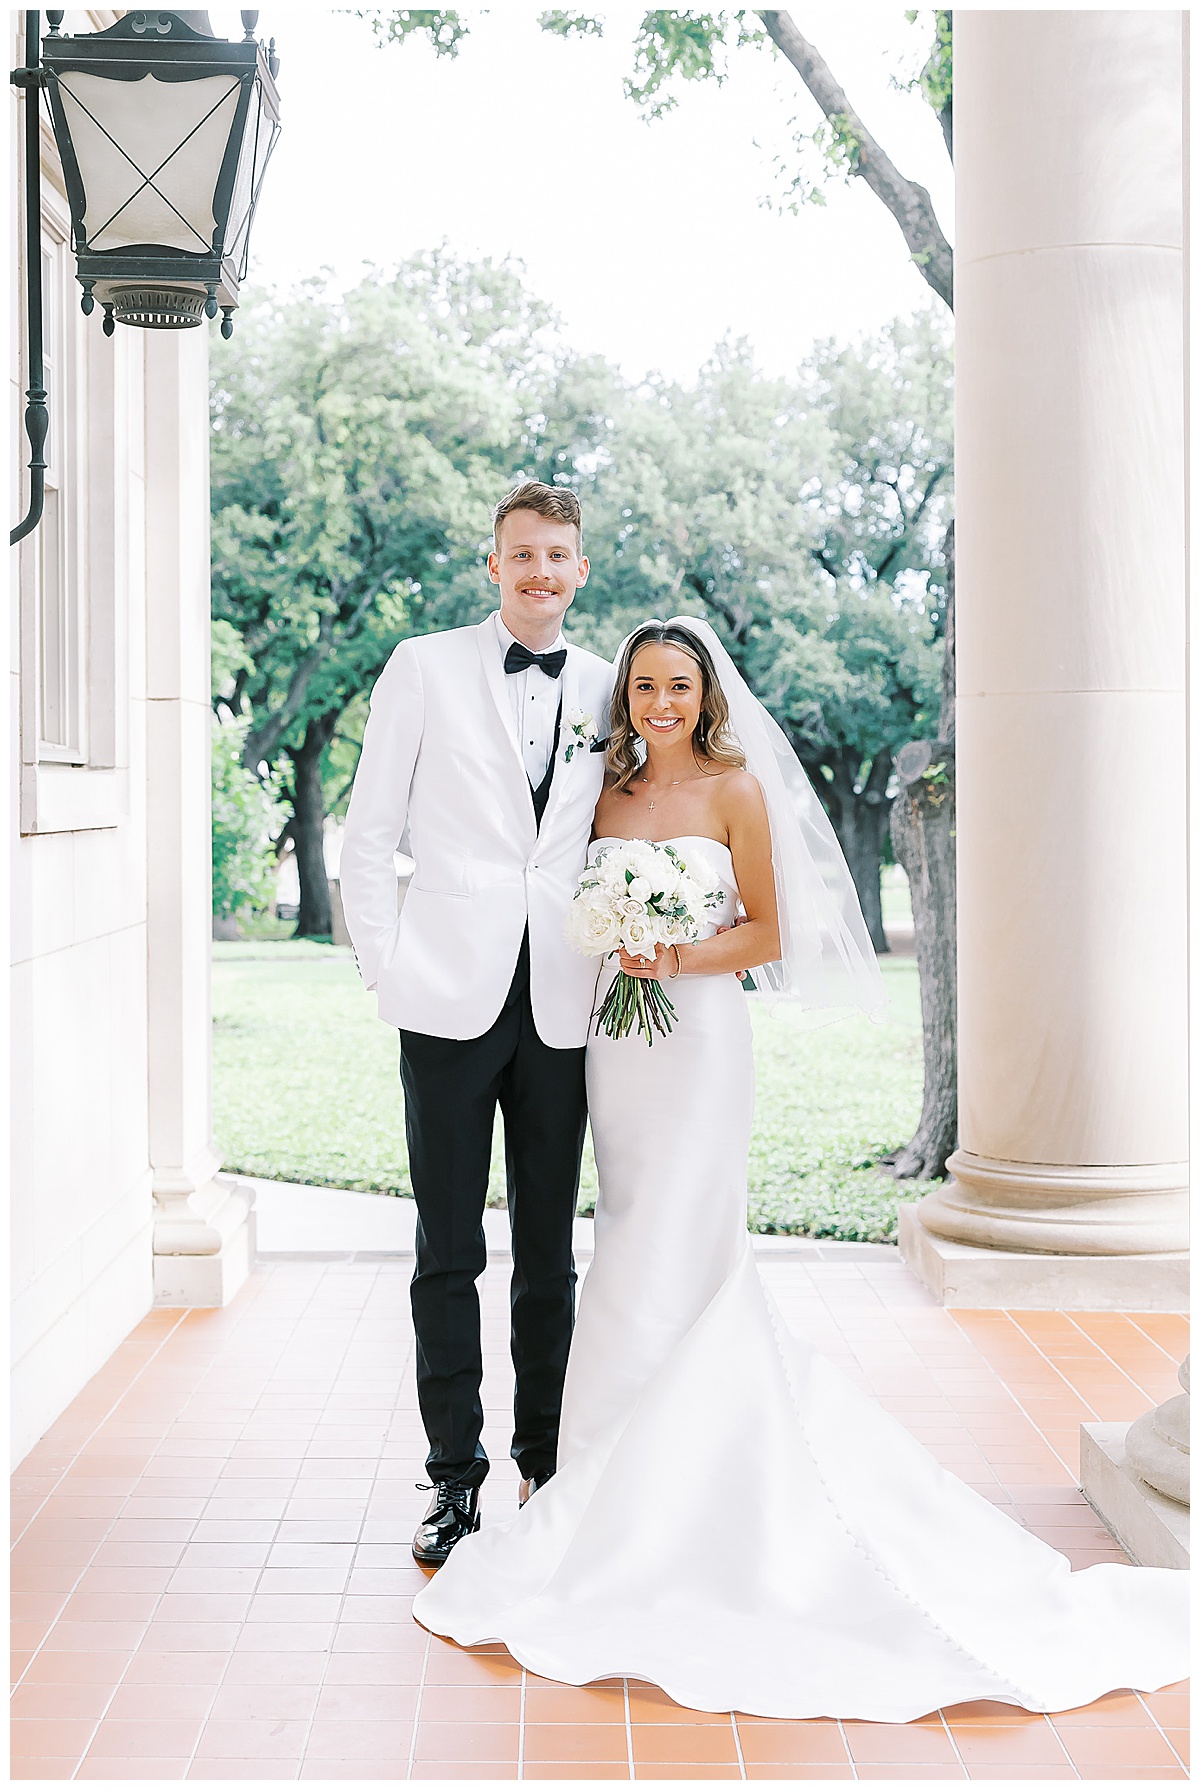 Caroline and Casen's wedding at Robert Carr Chapel in Fort Worth, TX. #dallasweddingphotographer #fortworthweddingphotographer